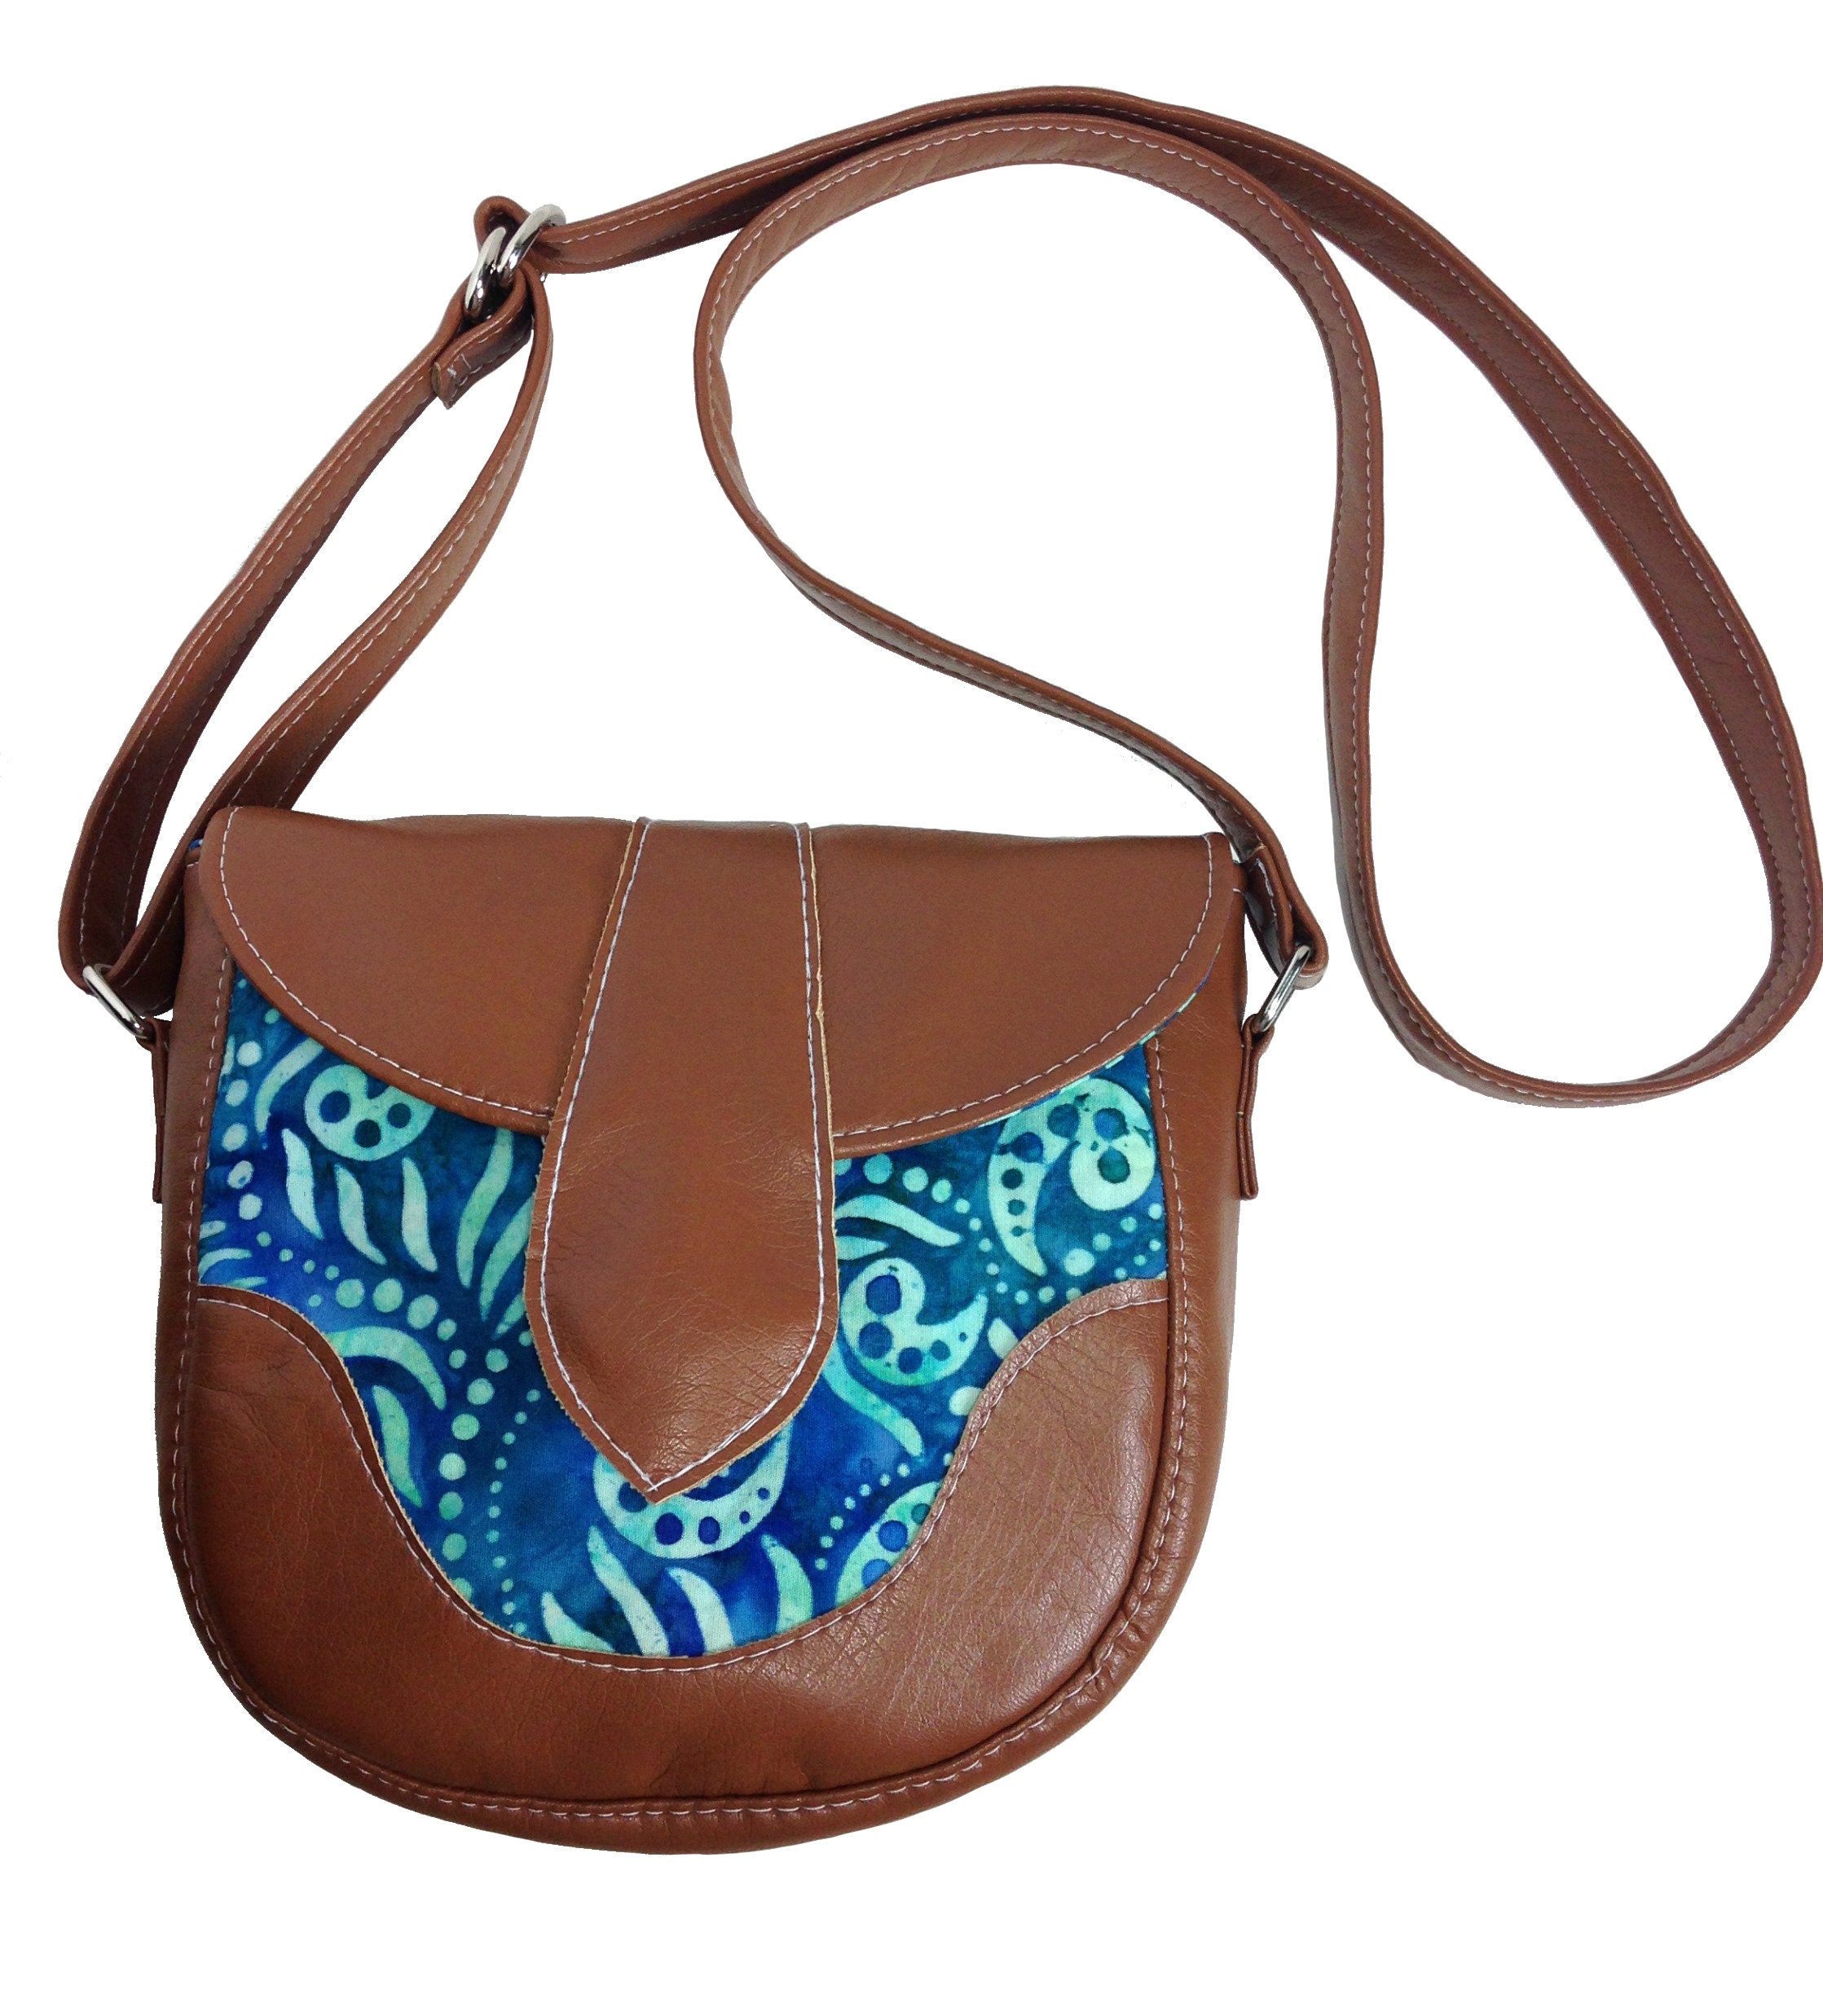 Sew your own festive handbag - Free Tutorial - I AM Patterns